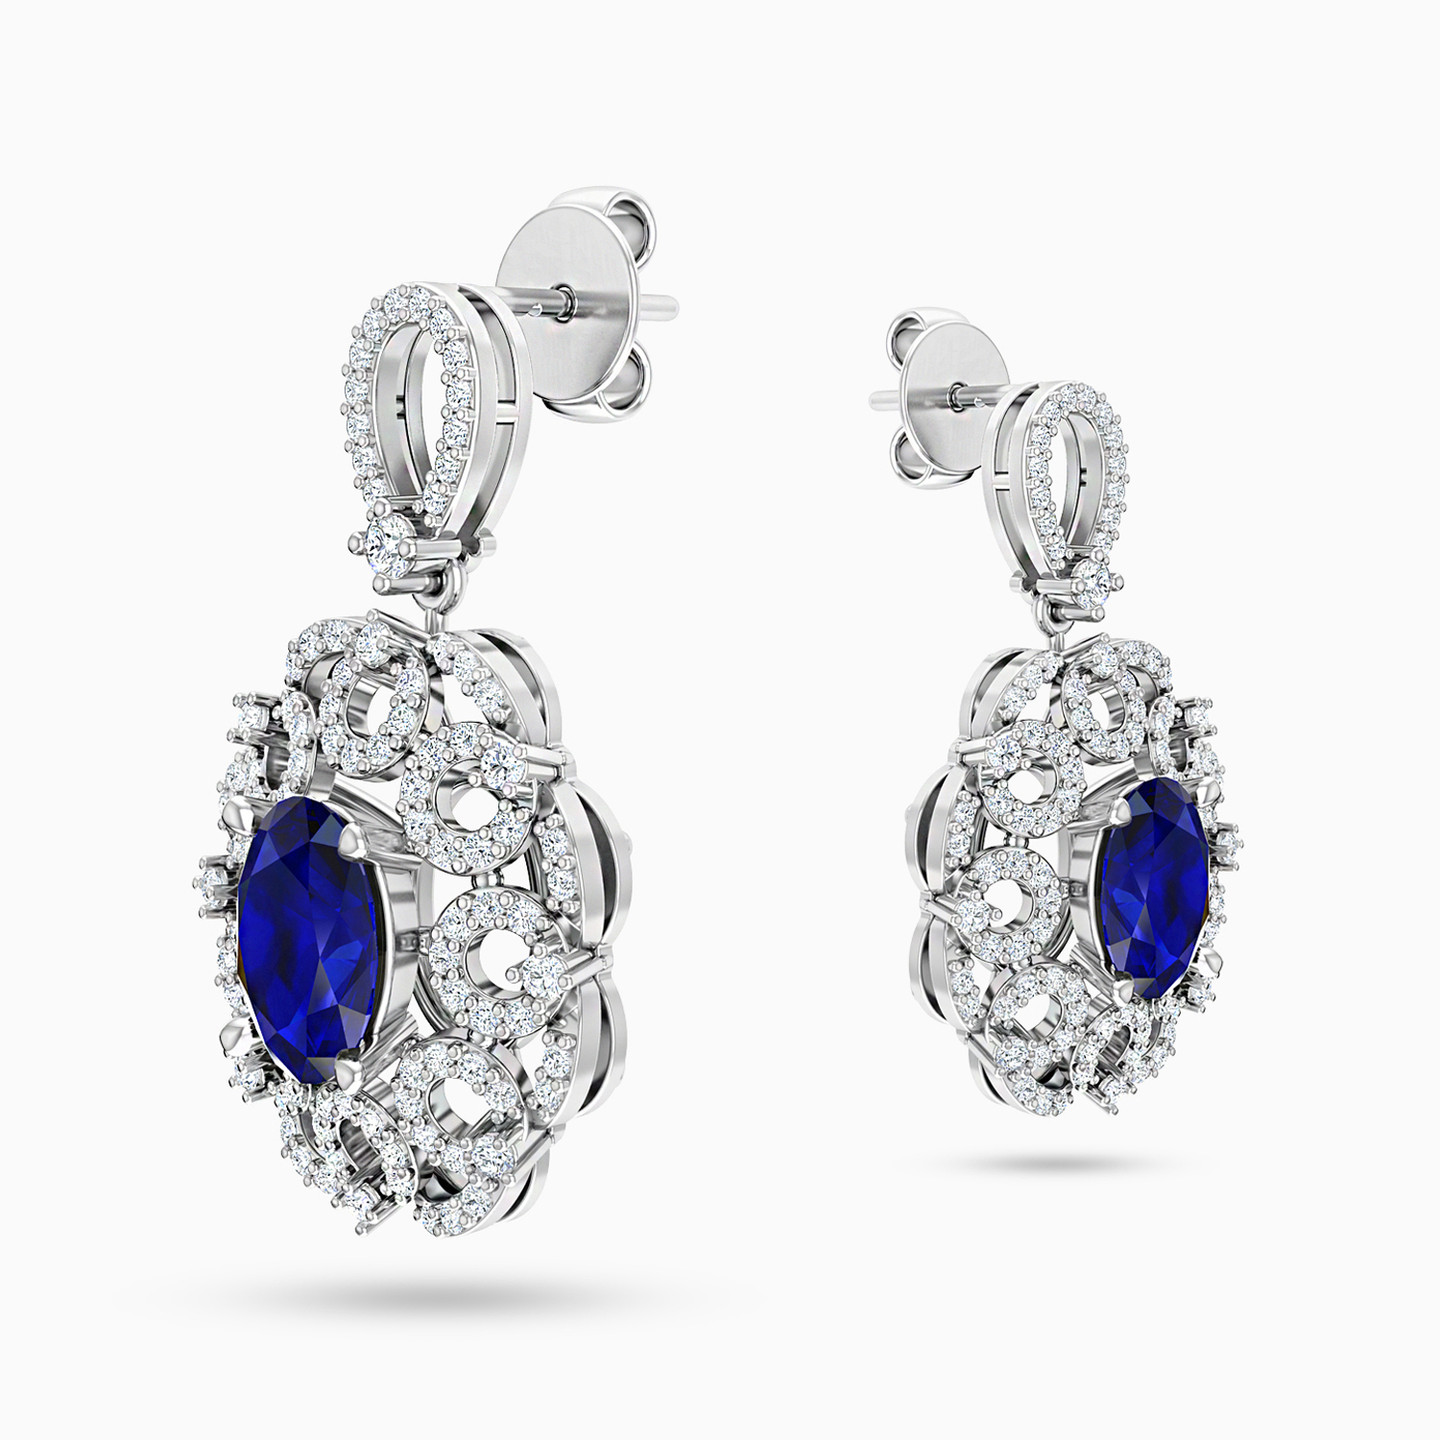 18K Gold Diamond & Colored Stones Drop Earrings - 3